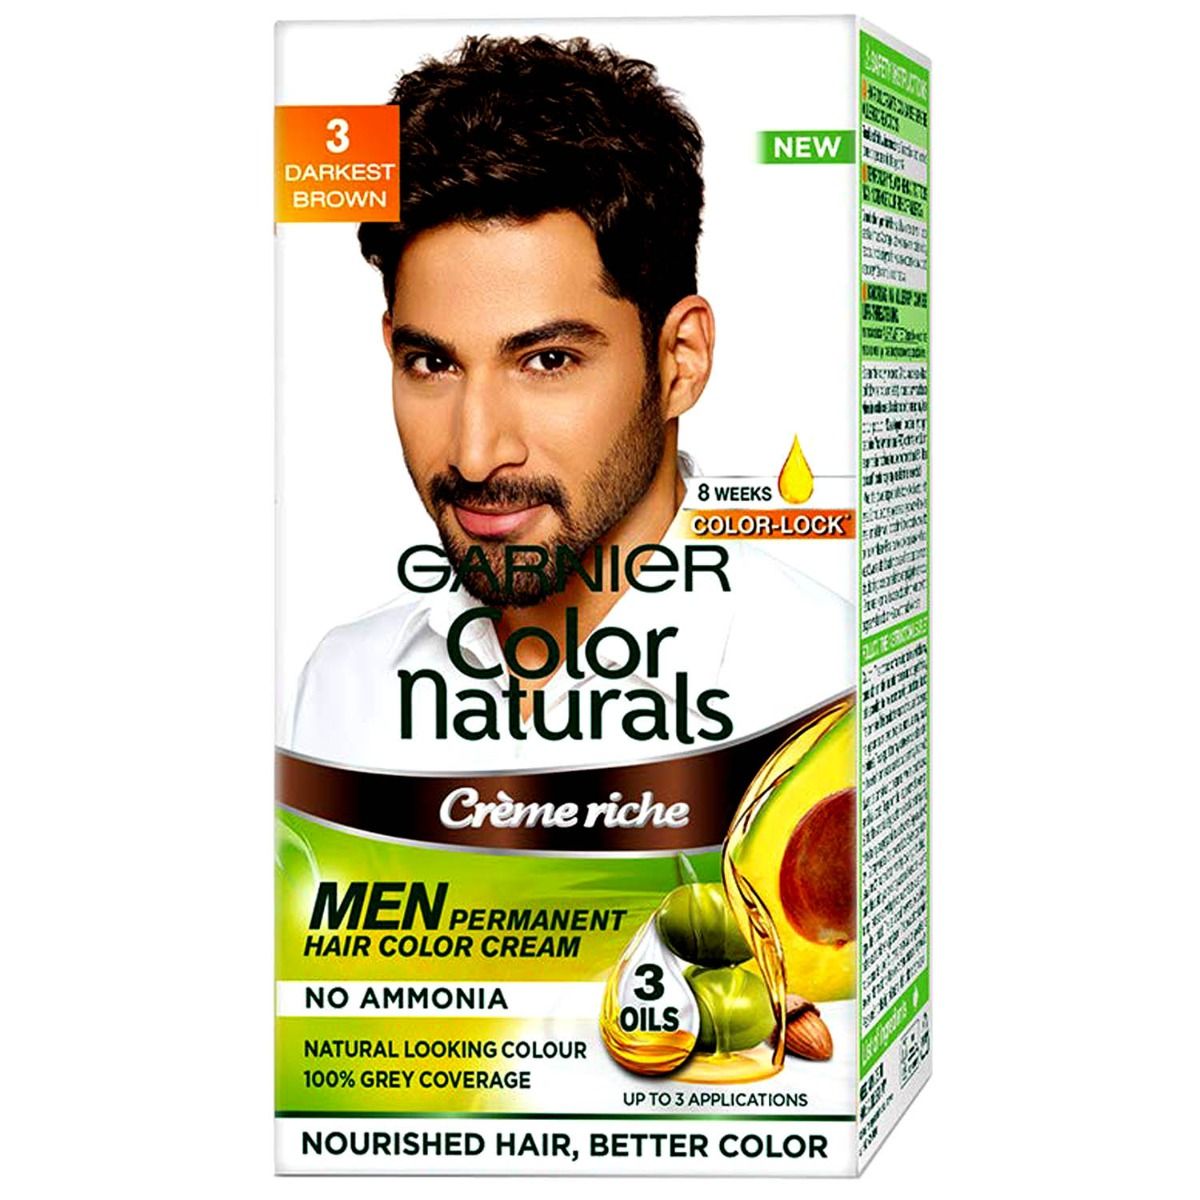 Somatische cel Saai Vereniging Garnier Colour Naturals Crème Riche Men Hair Colour Cream Shade 3, Darkest  Brown, 30 ml+ 30 gm Price, Uses, Side Effects, Composition - Apollo Pharmacy